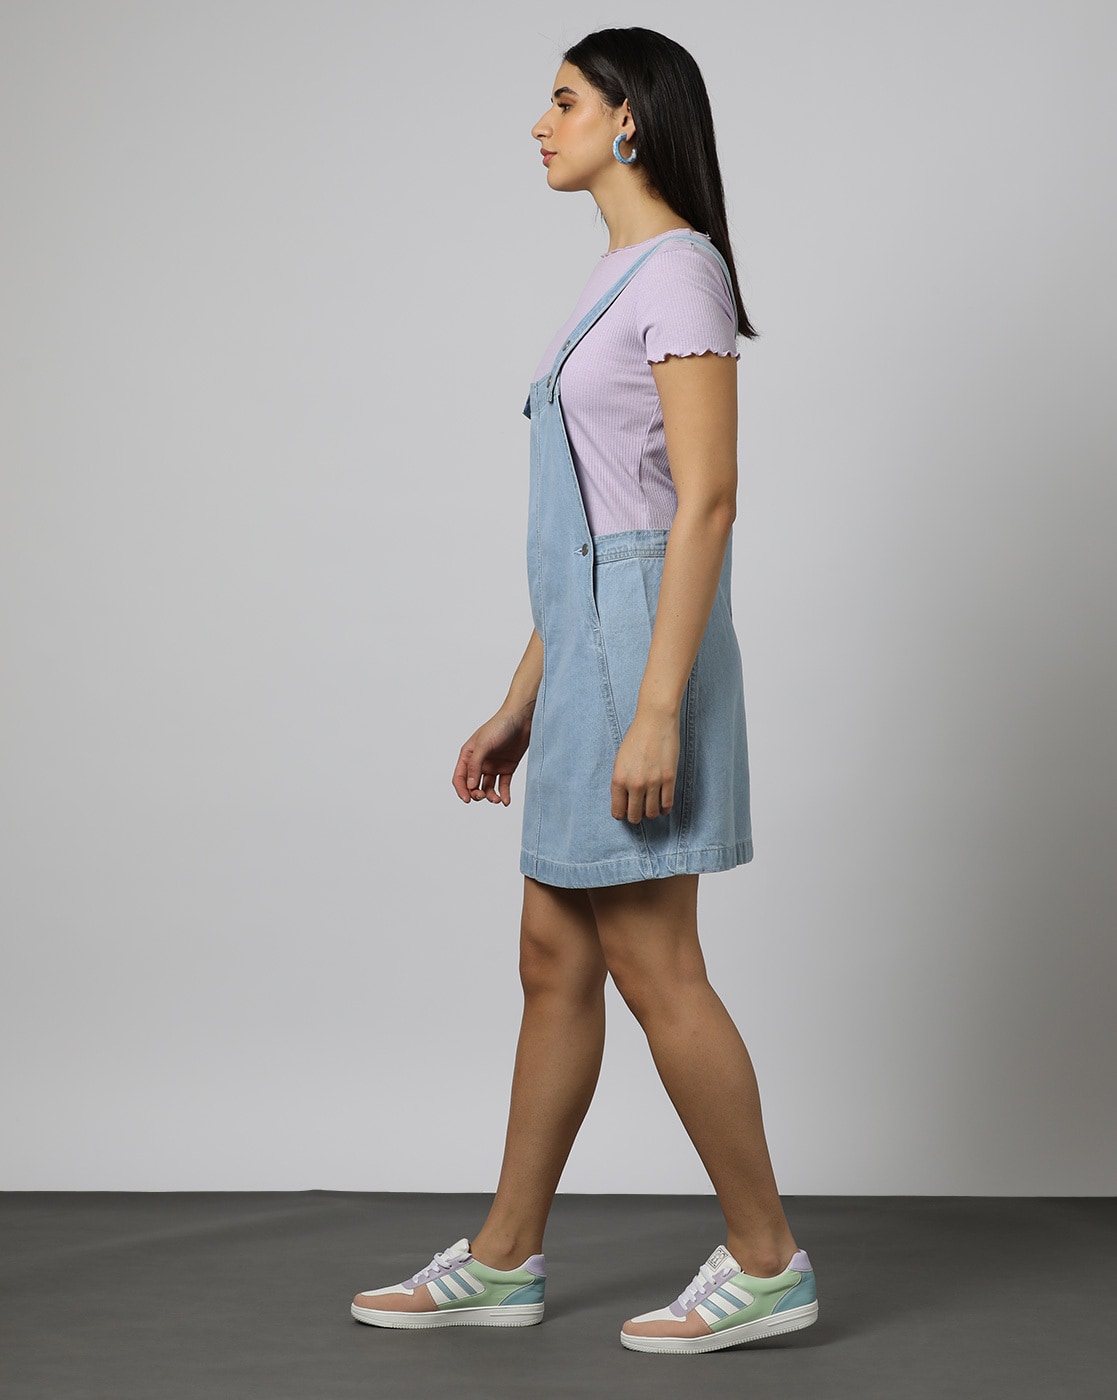 Designer Budge Letter Womens Dress Shirt Slim Fit Pleated Dungaree Skirt  Dress With Zipper Bust For Spring/Summer Outwear HN6I From Designer2088,  $46.7 | DHgate.Com